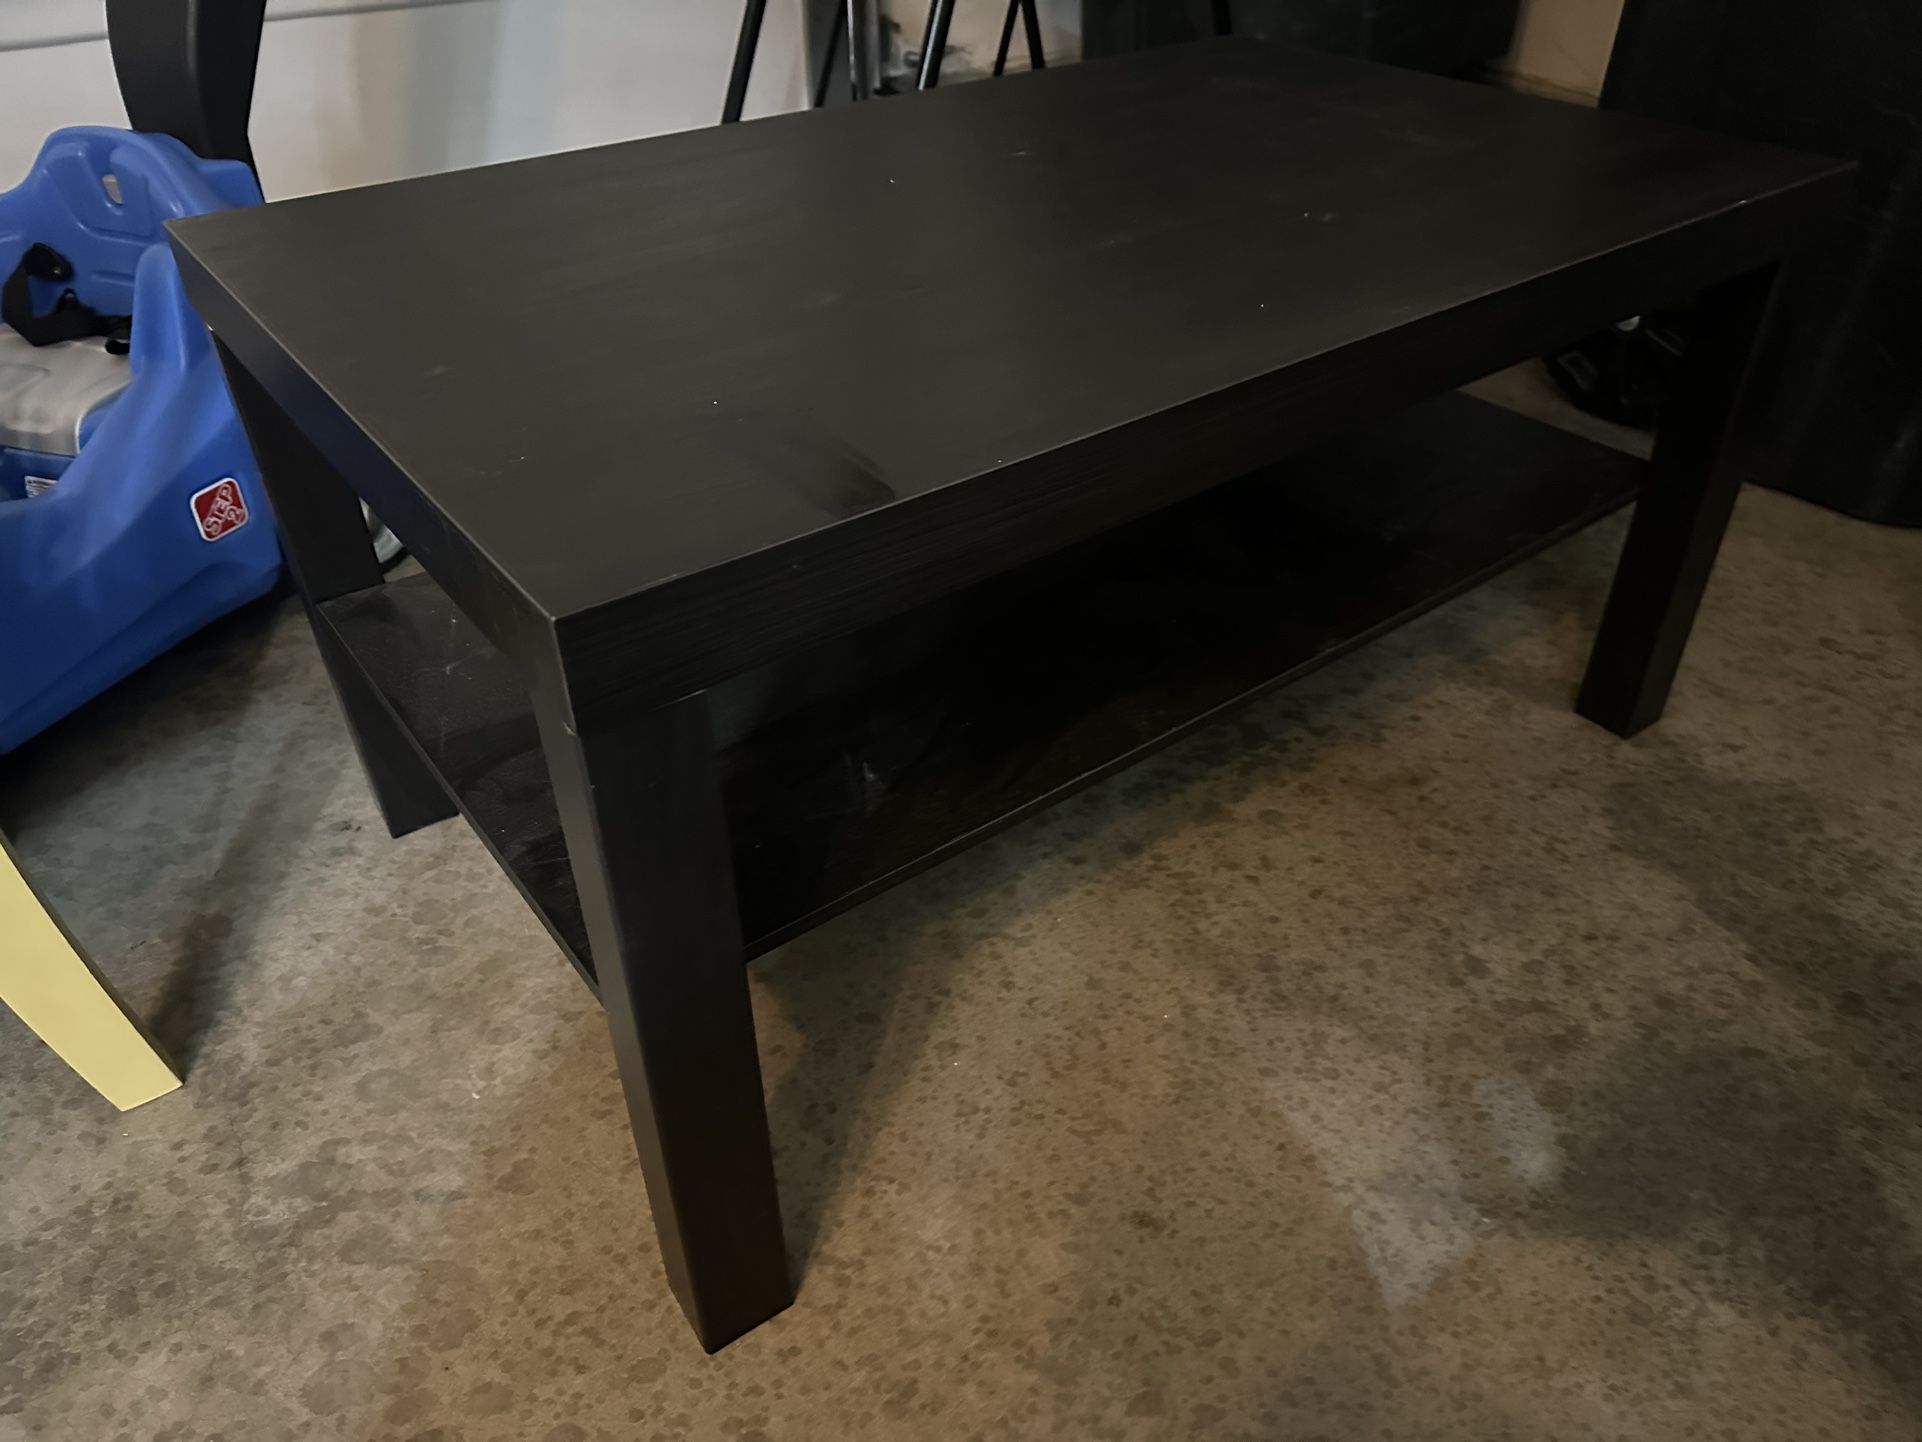 Ikea Coffee Table Black